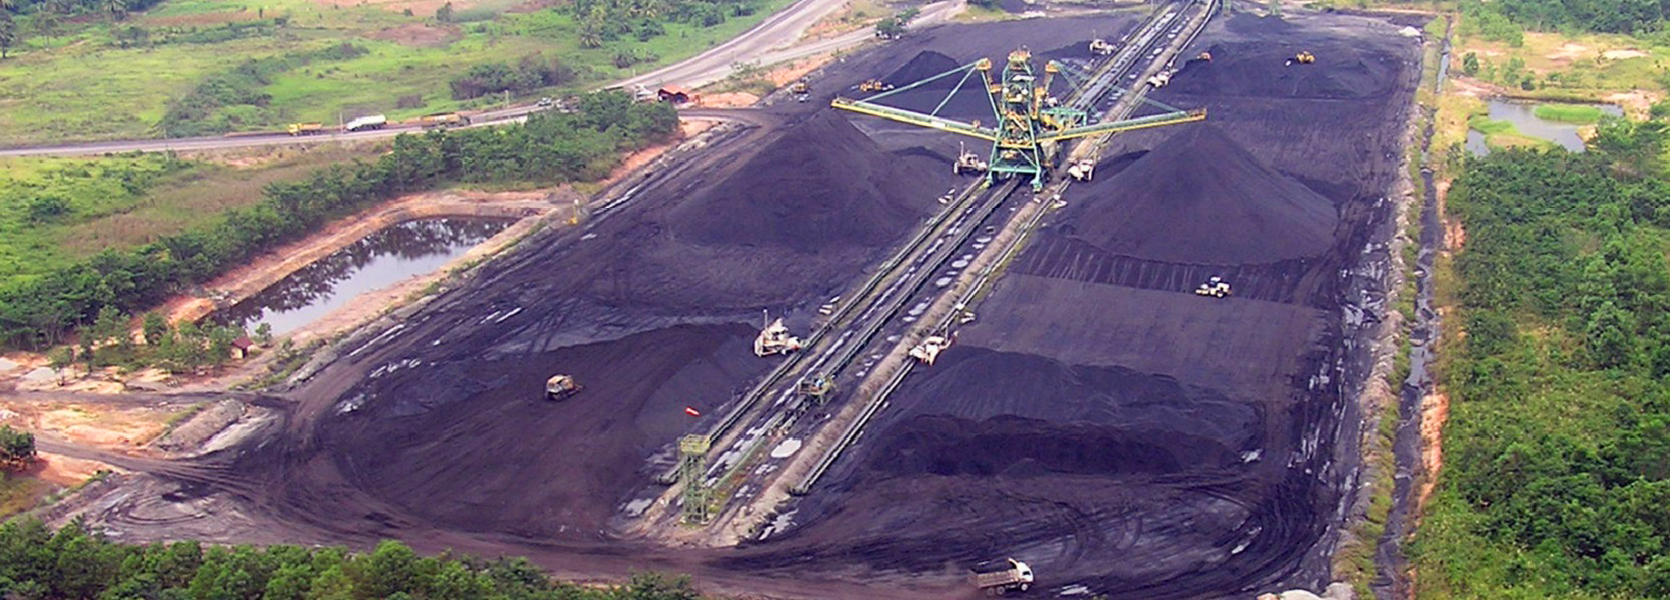 Image: Bontang Coal Mine: New materials handling system